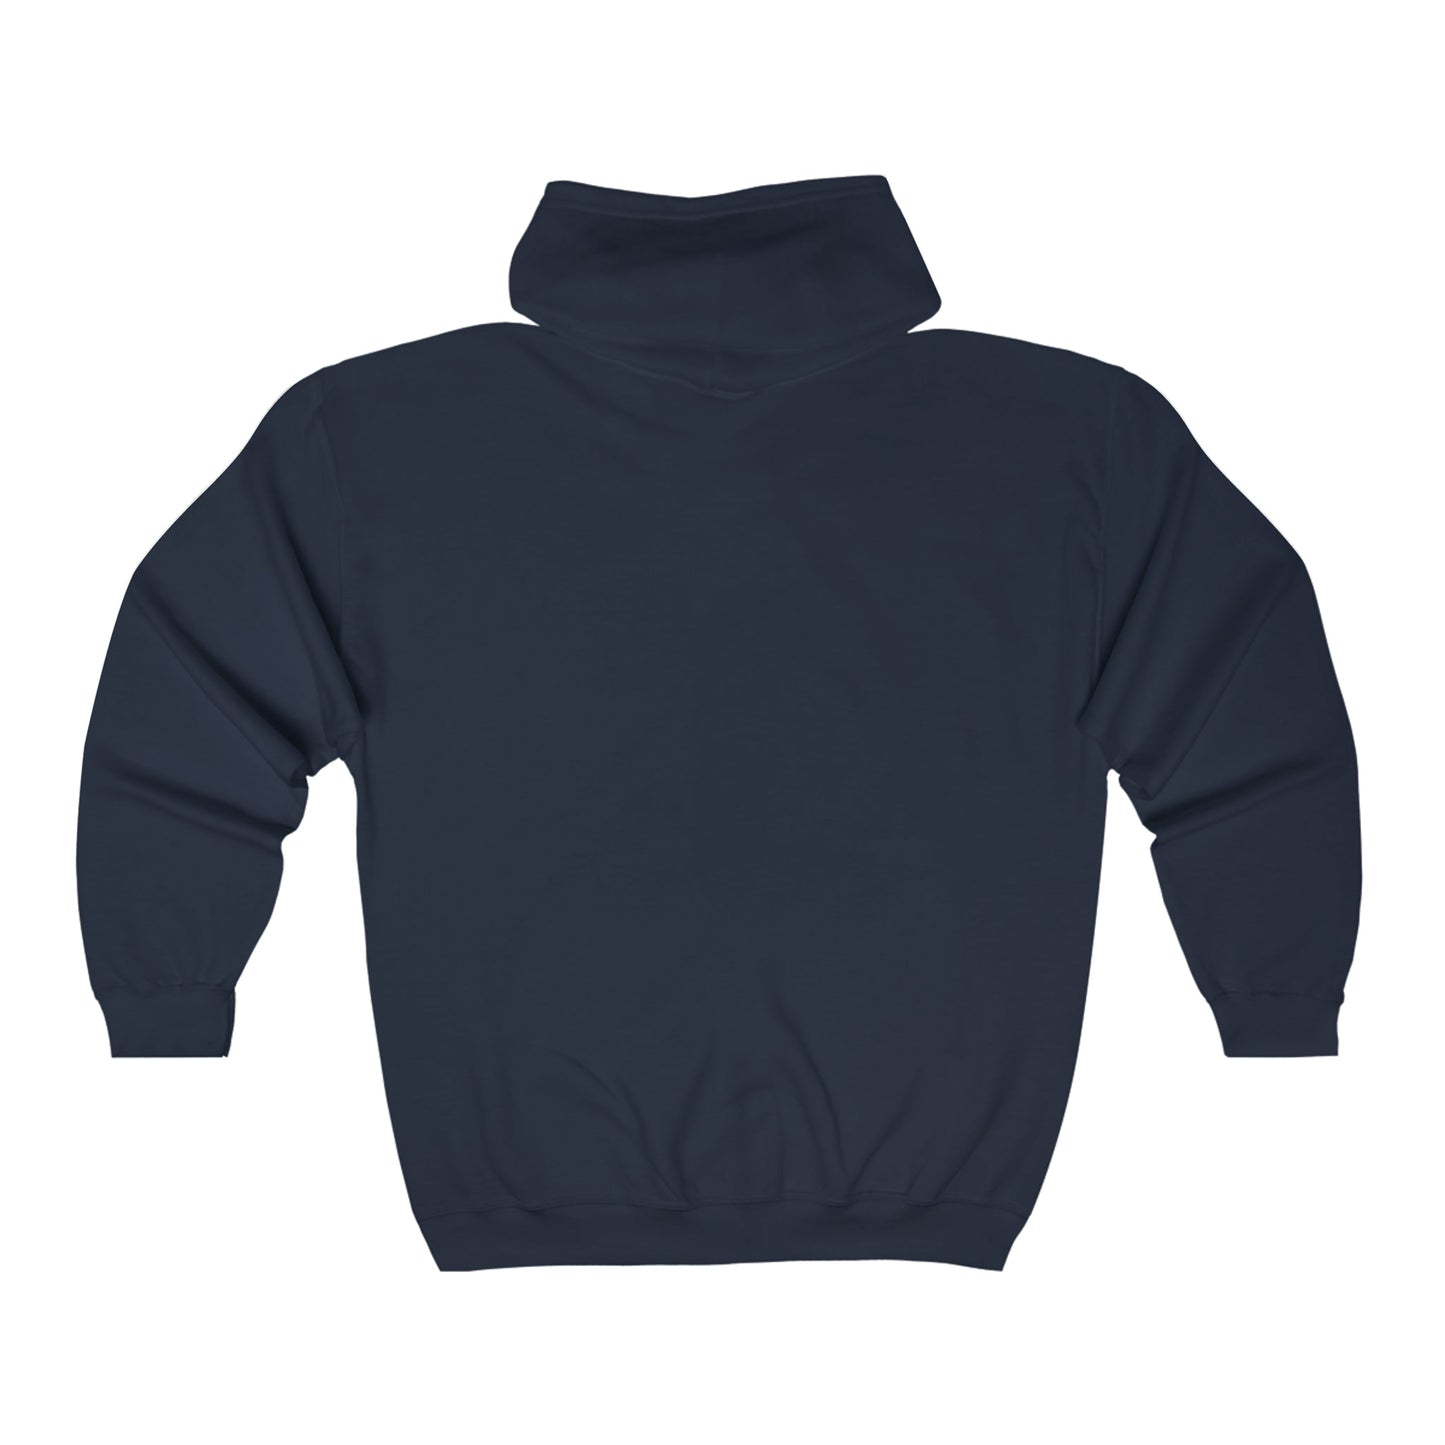 Be A Good Human | Zip-up Sweatshirt - Detezi Designs-23386277884587877897